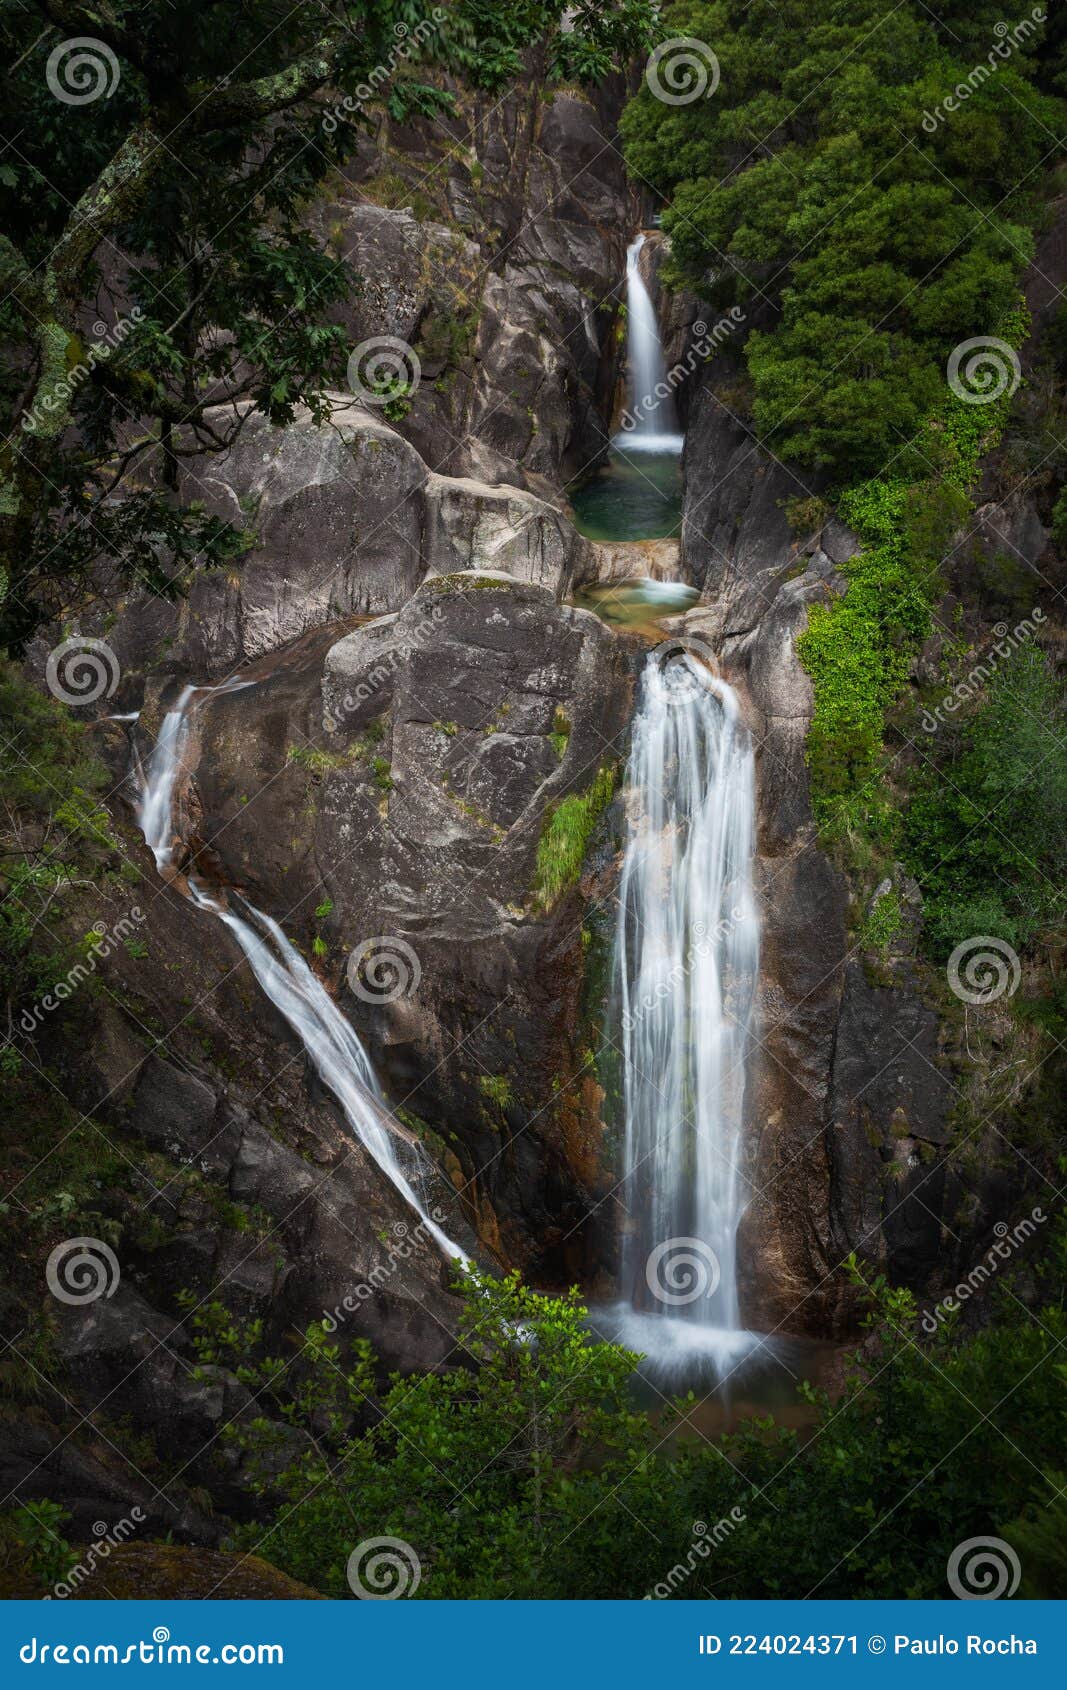 arado waterfall in portugal